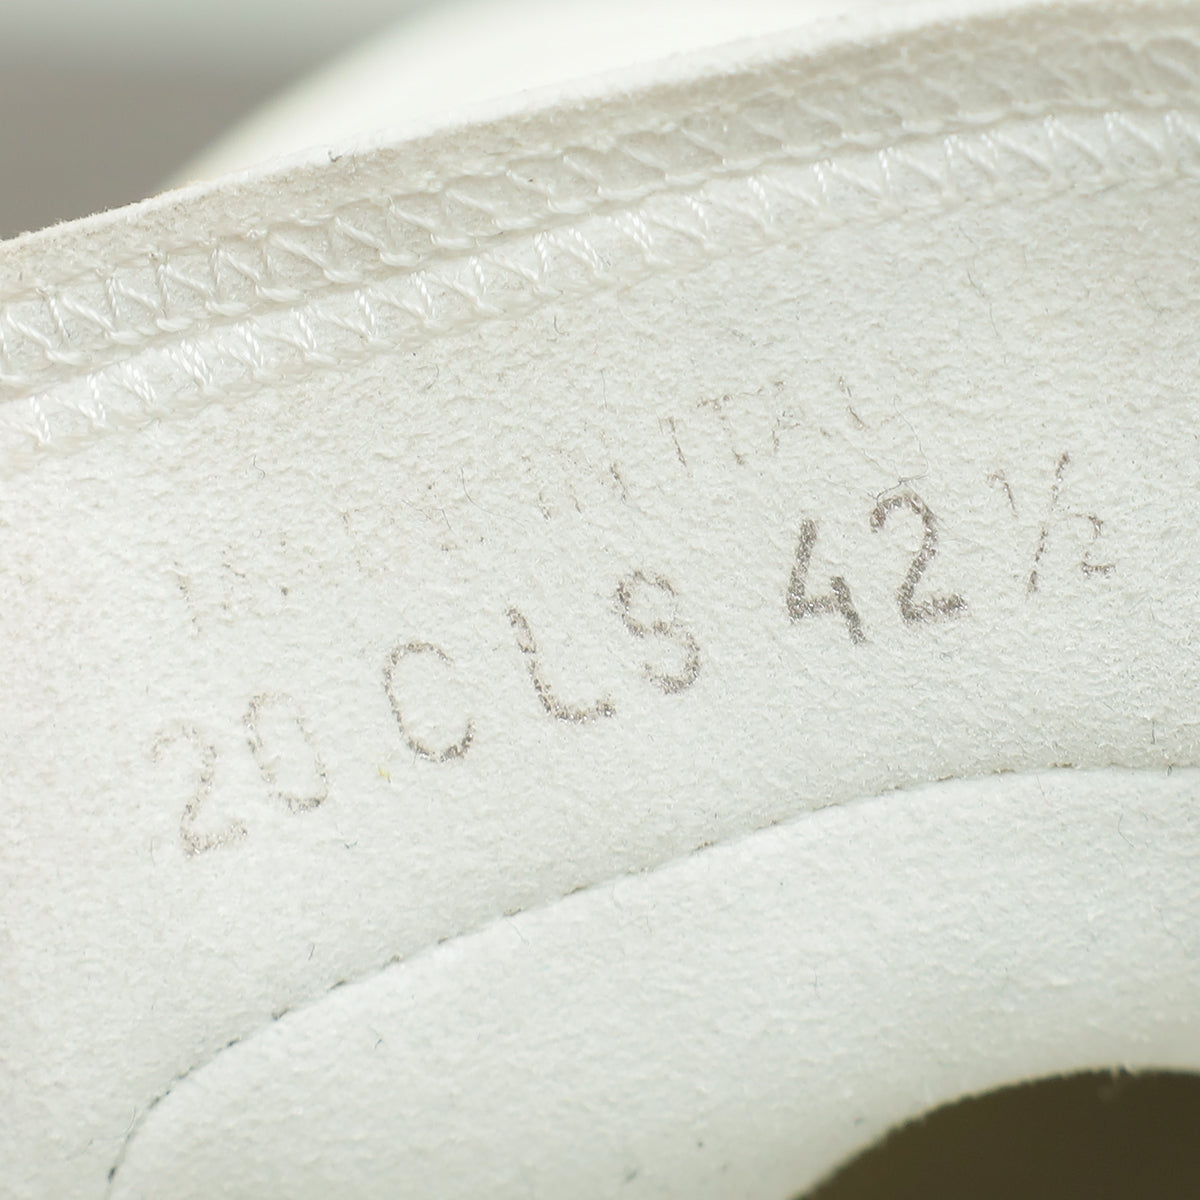 Christian Dior White B23 Low Top Sneaker 42.5